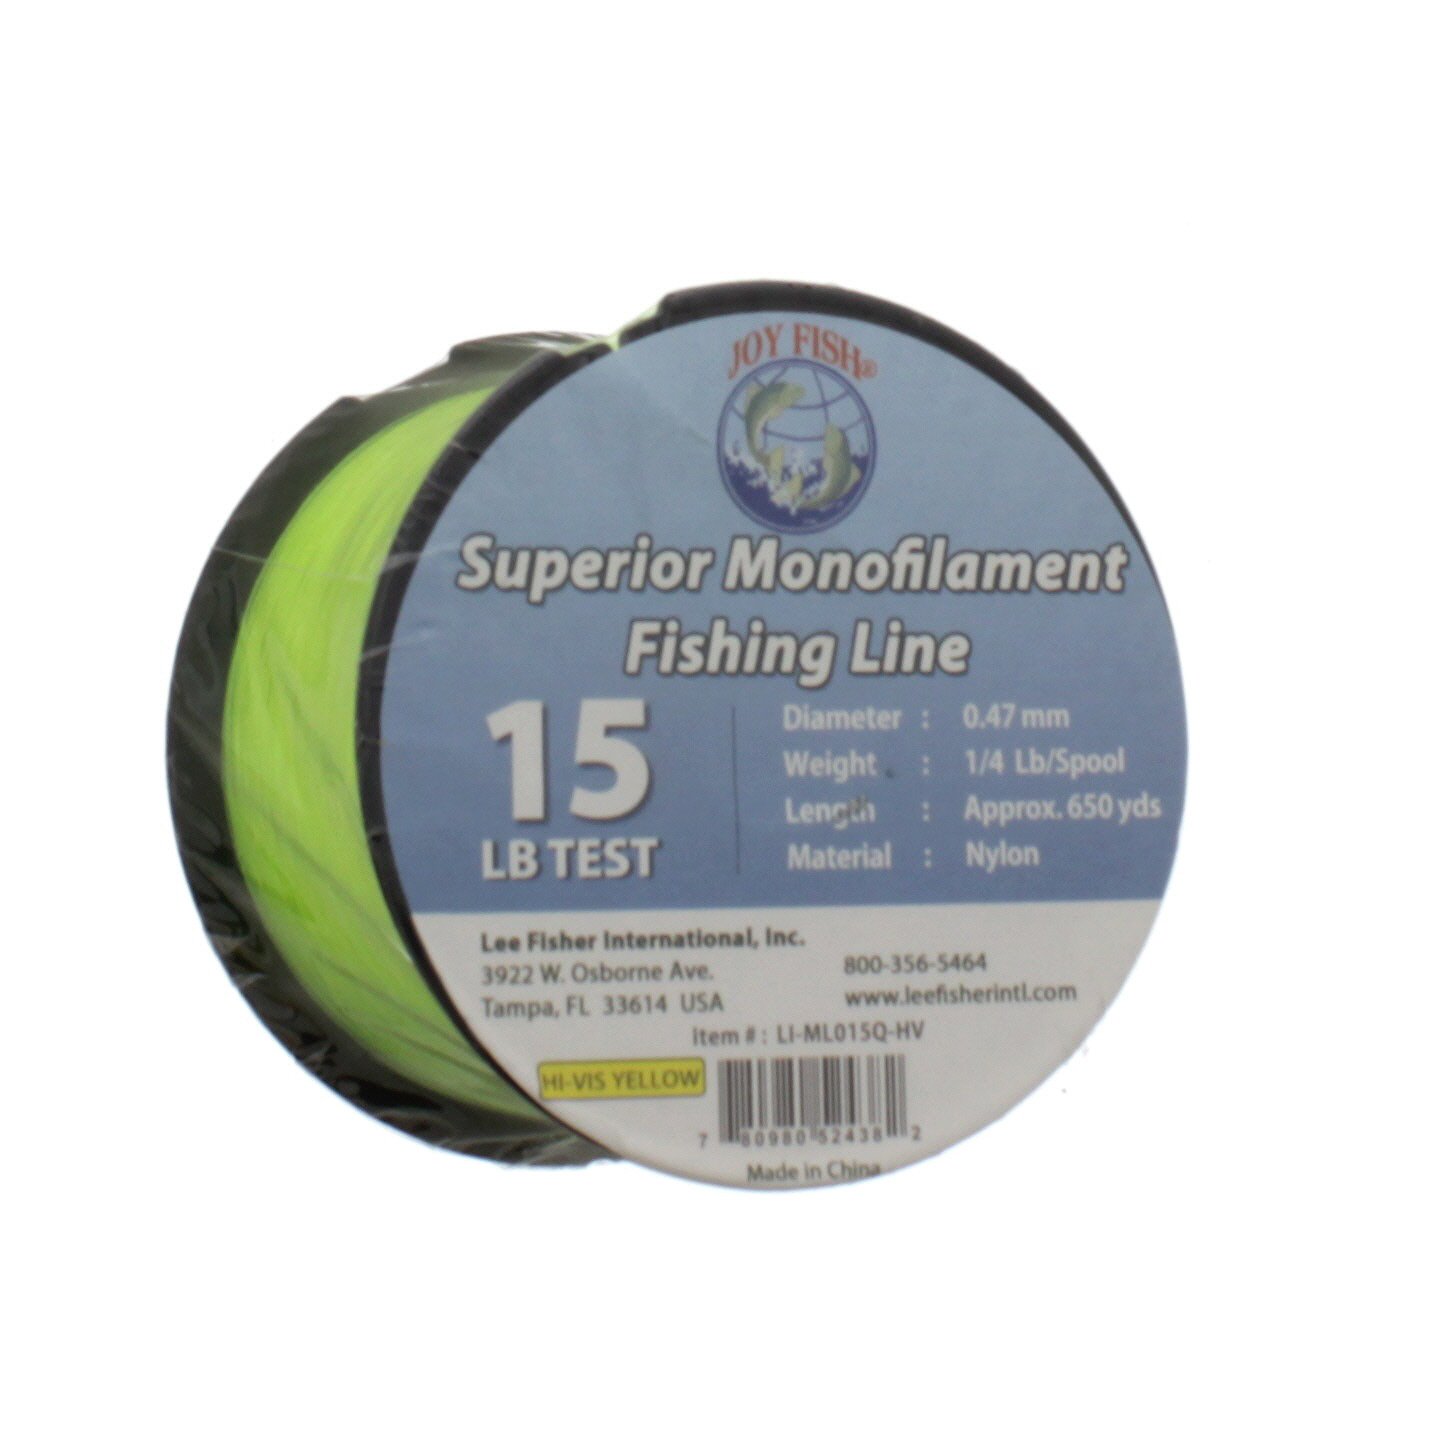 Joy Fish Superior Monofilament Fishing Line, Hi-Vis Yellow 15lb 650yds -  Shop Fishing at H-E-B